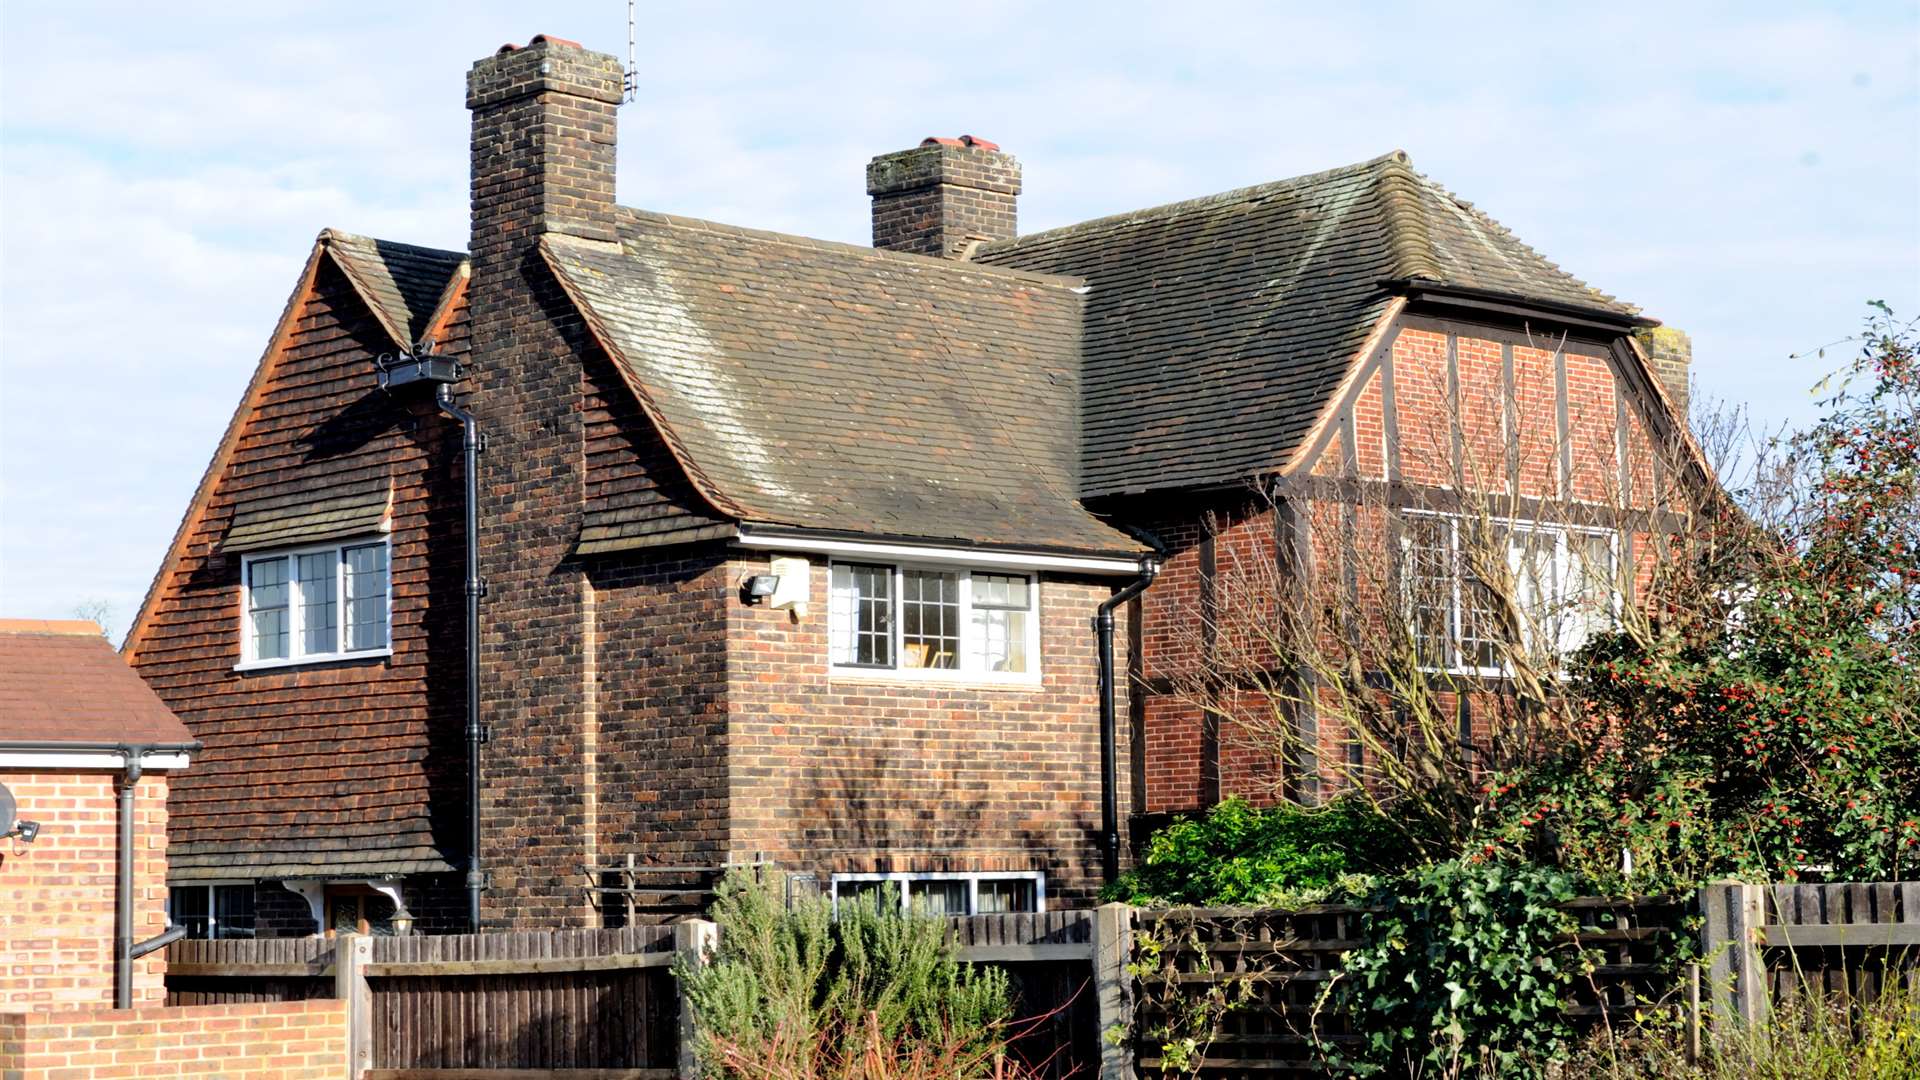 Brian Reader's £1 million home in Dartford Road